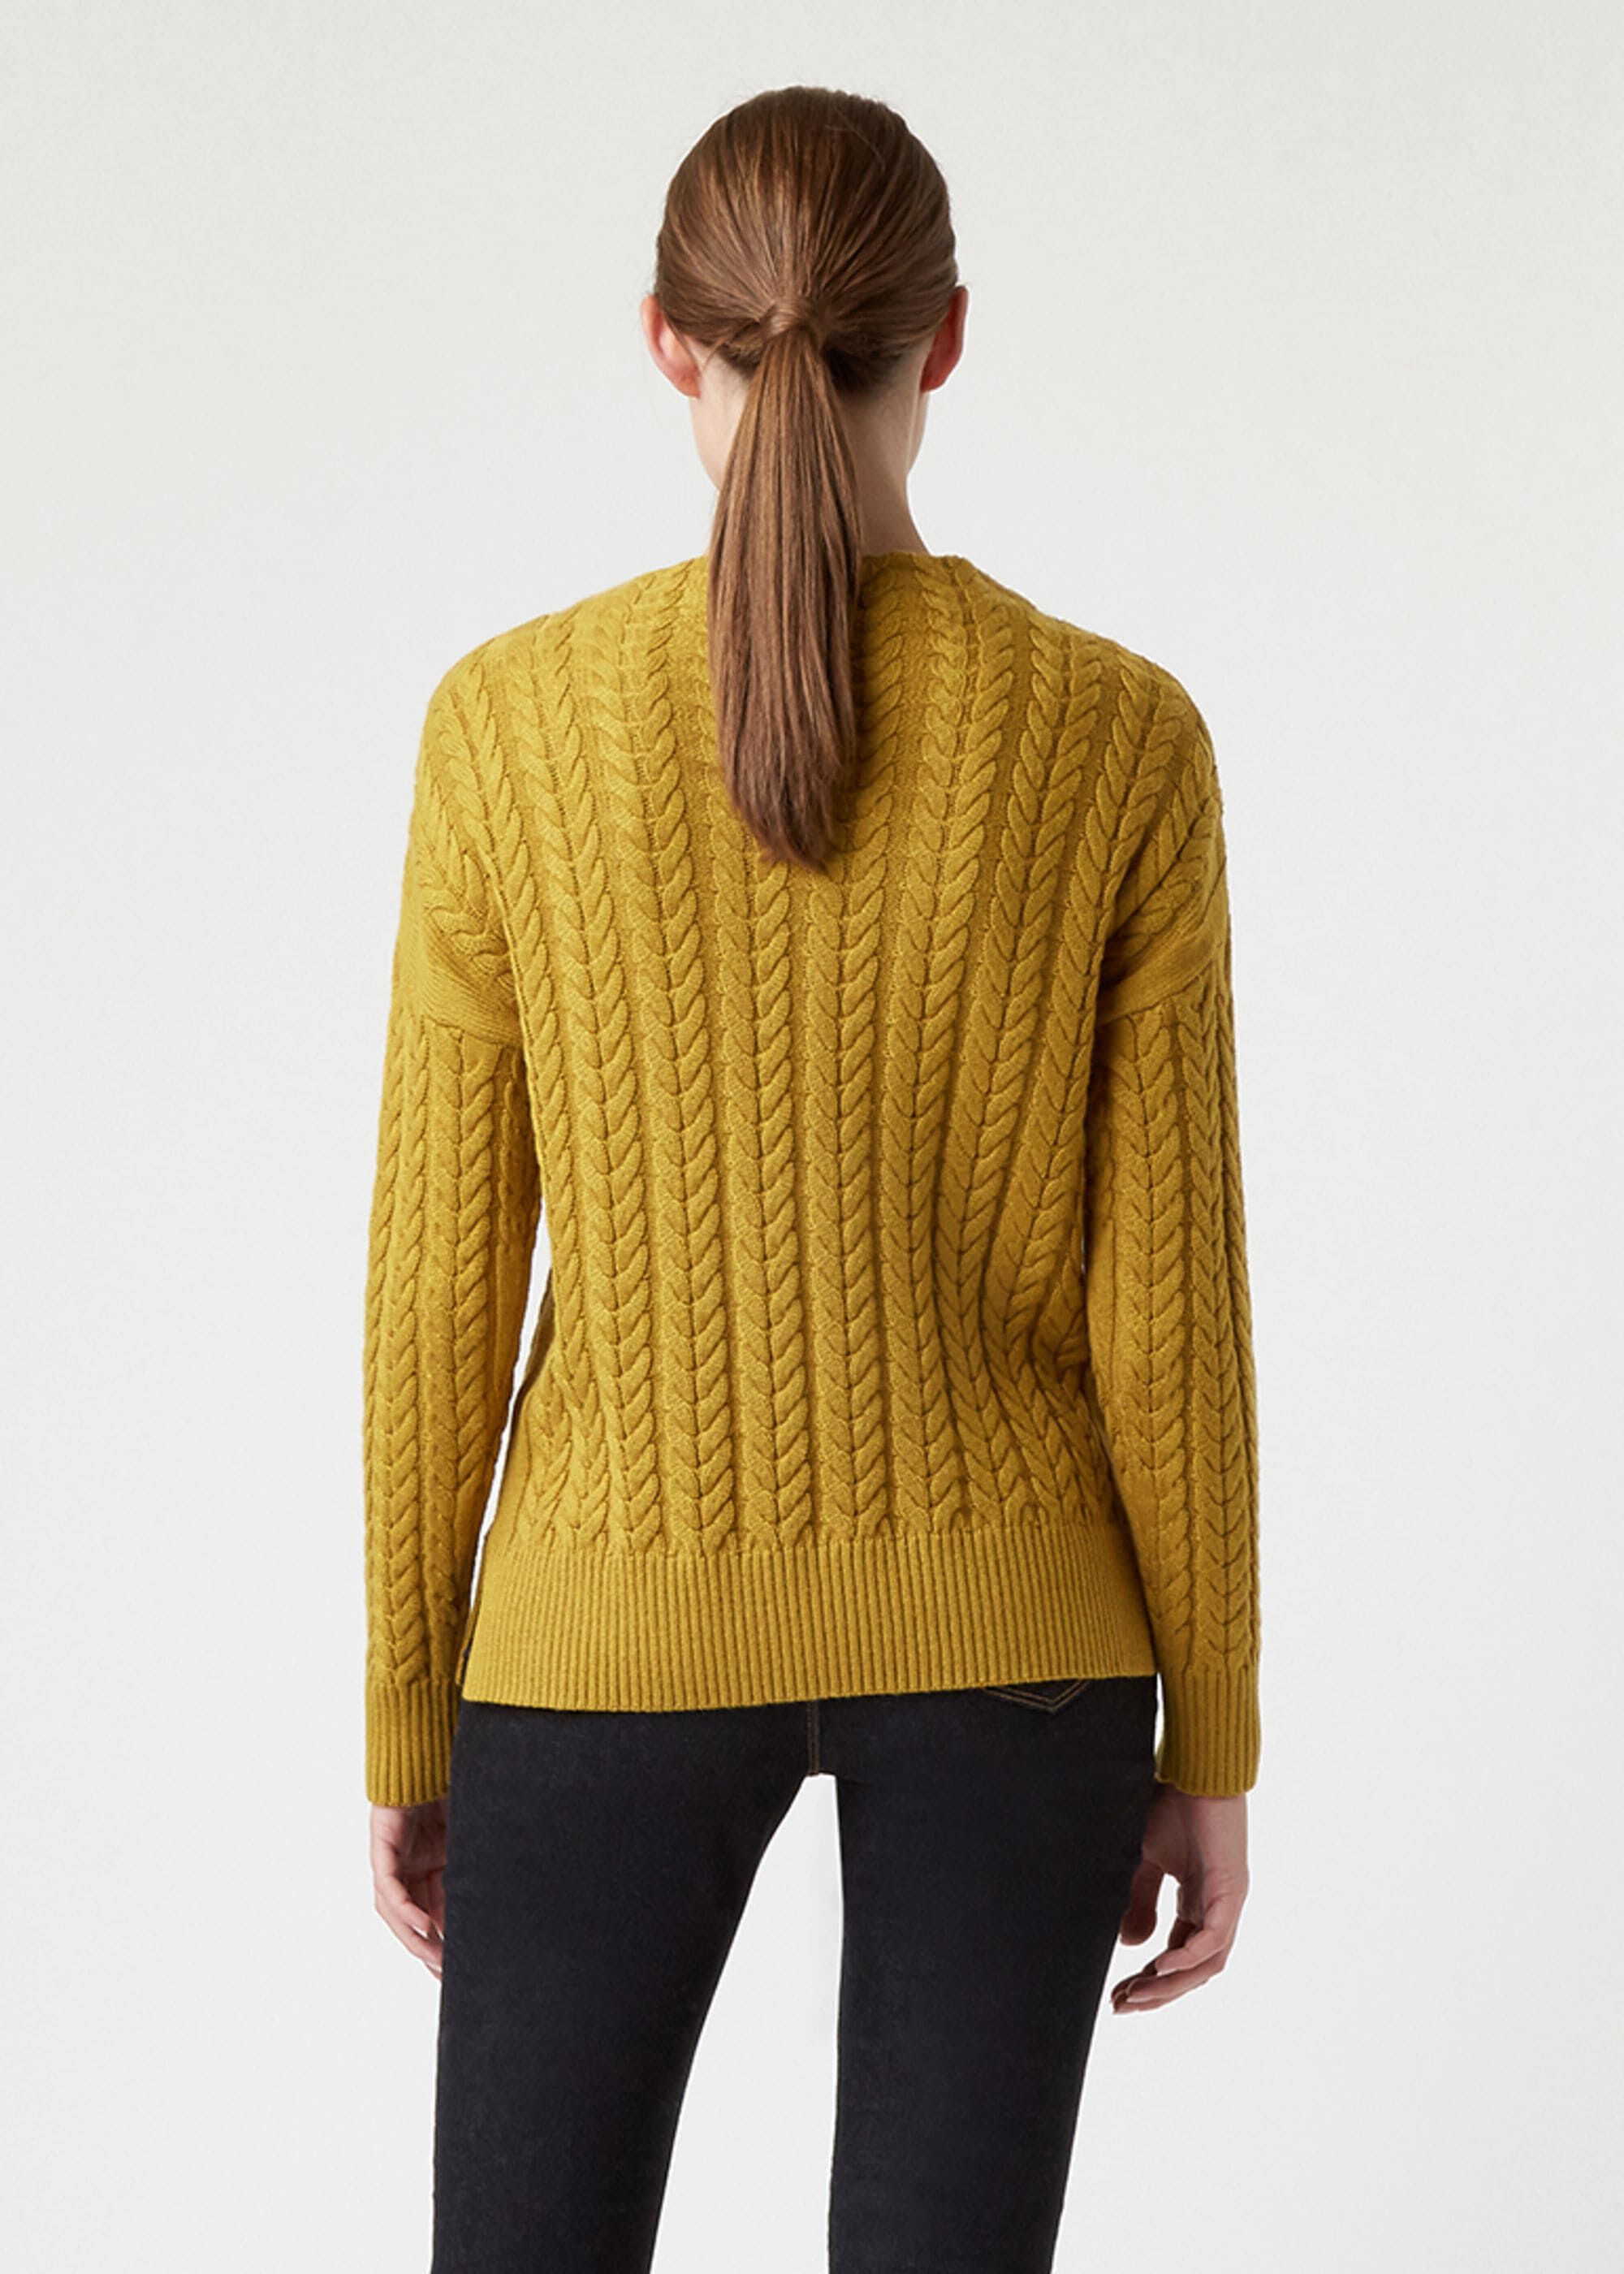 Hobbs Abigail Sweater Pullover Long Sleeve | eBay